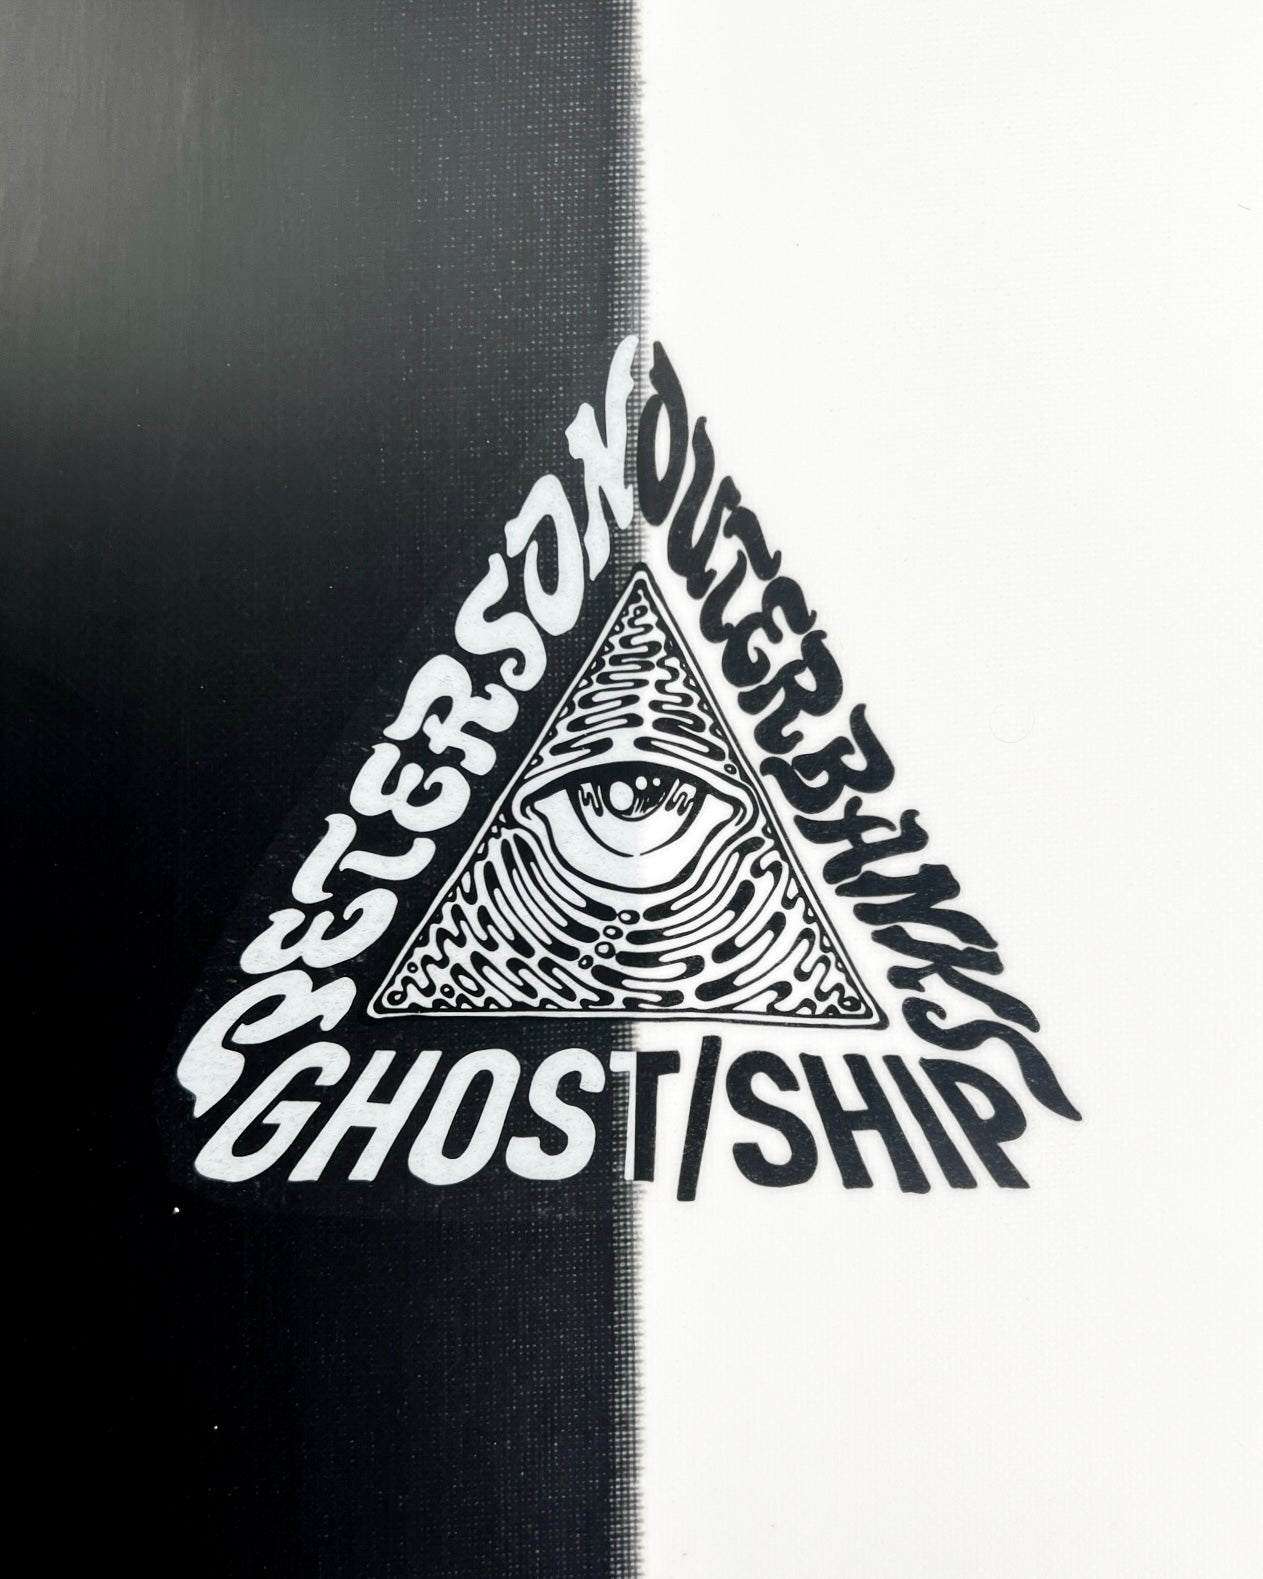 Ghost Ship x Josh Peterson Black & White Vee Twin Surfboard 6’10” - GHOSTSHIP.Supply